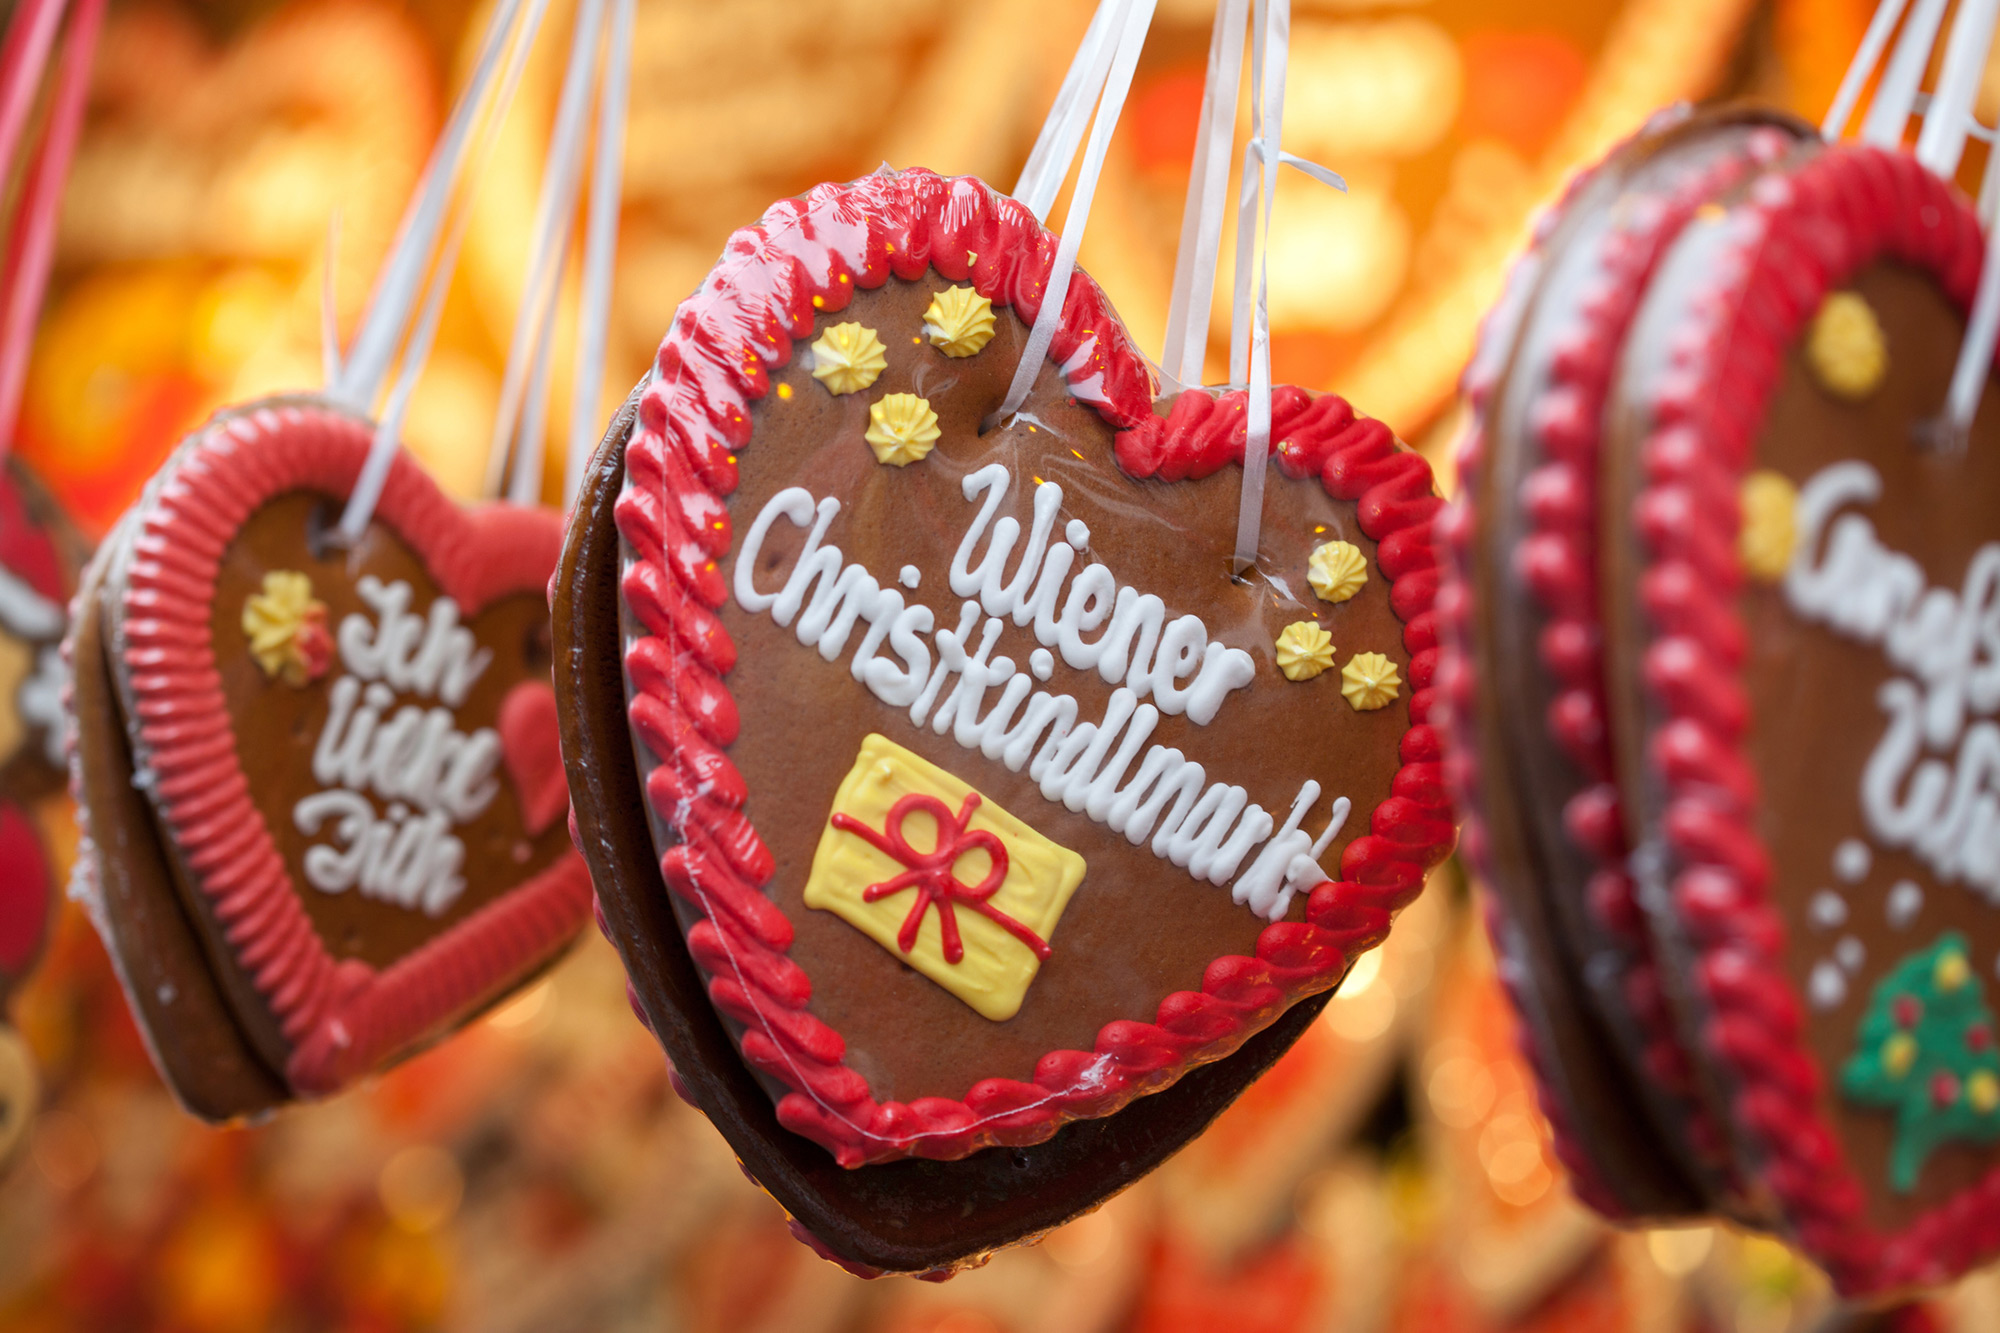 Visit Christkindlmarkt for your Christmas Shopping